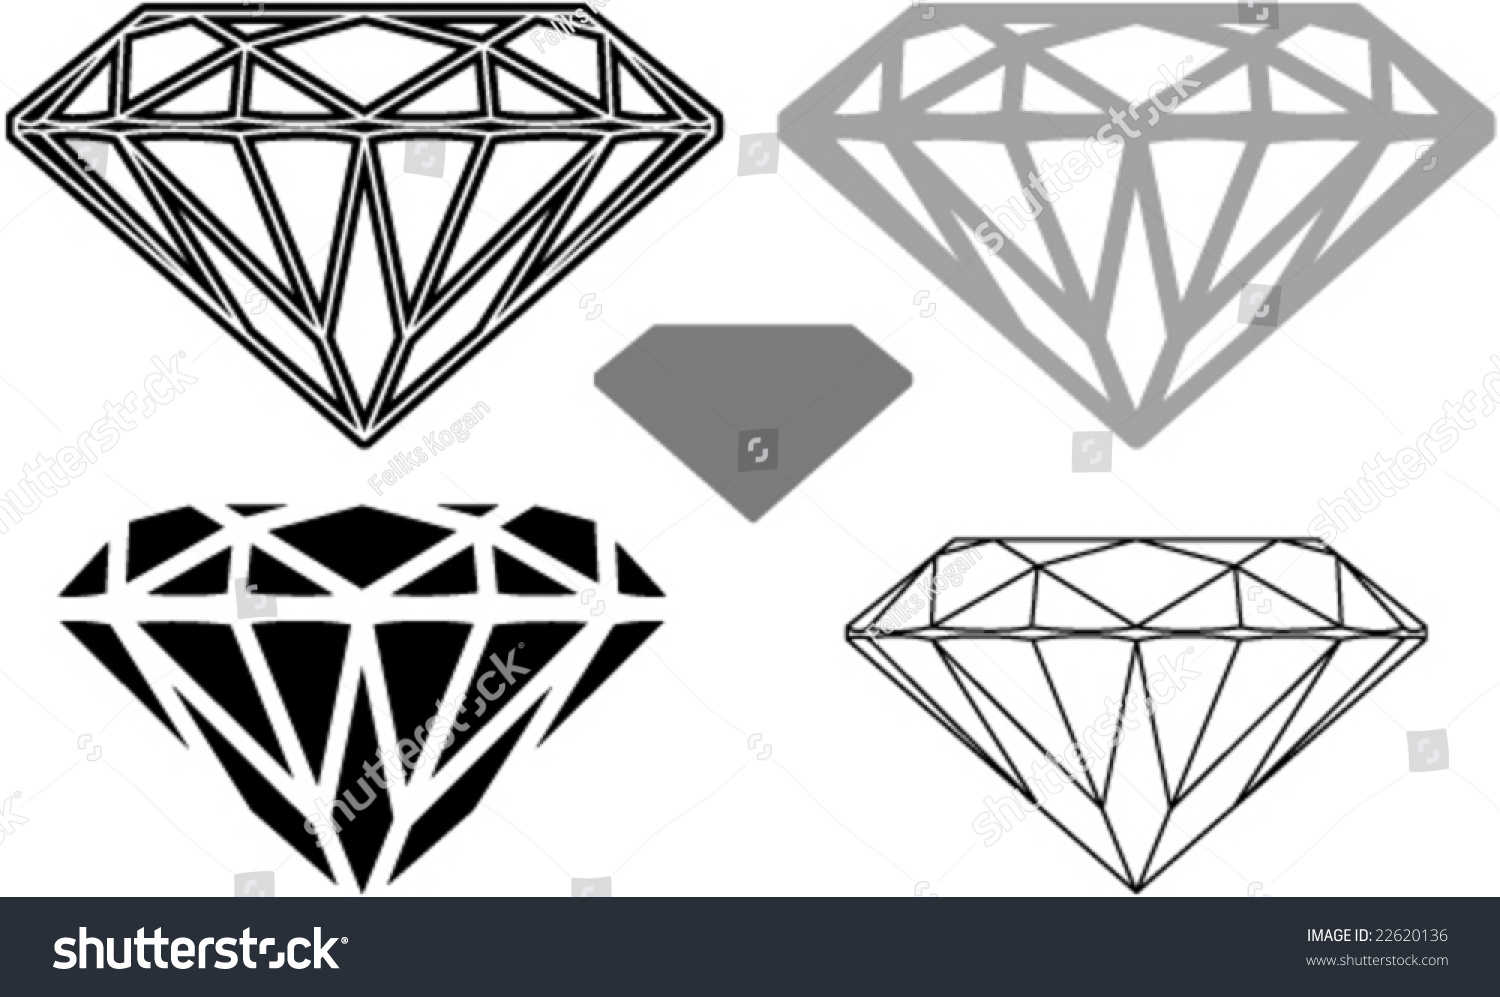 The Diamond, Shape And Cutting: Clip-Art Stock Vector 22620136 ...